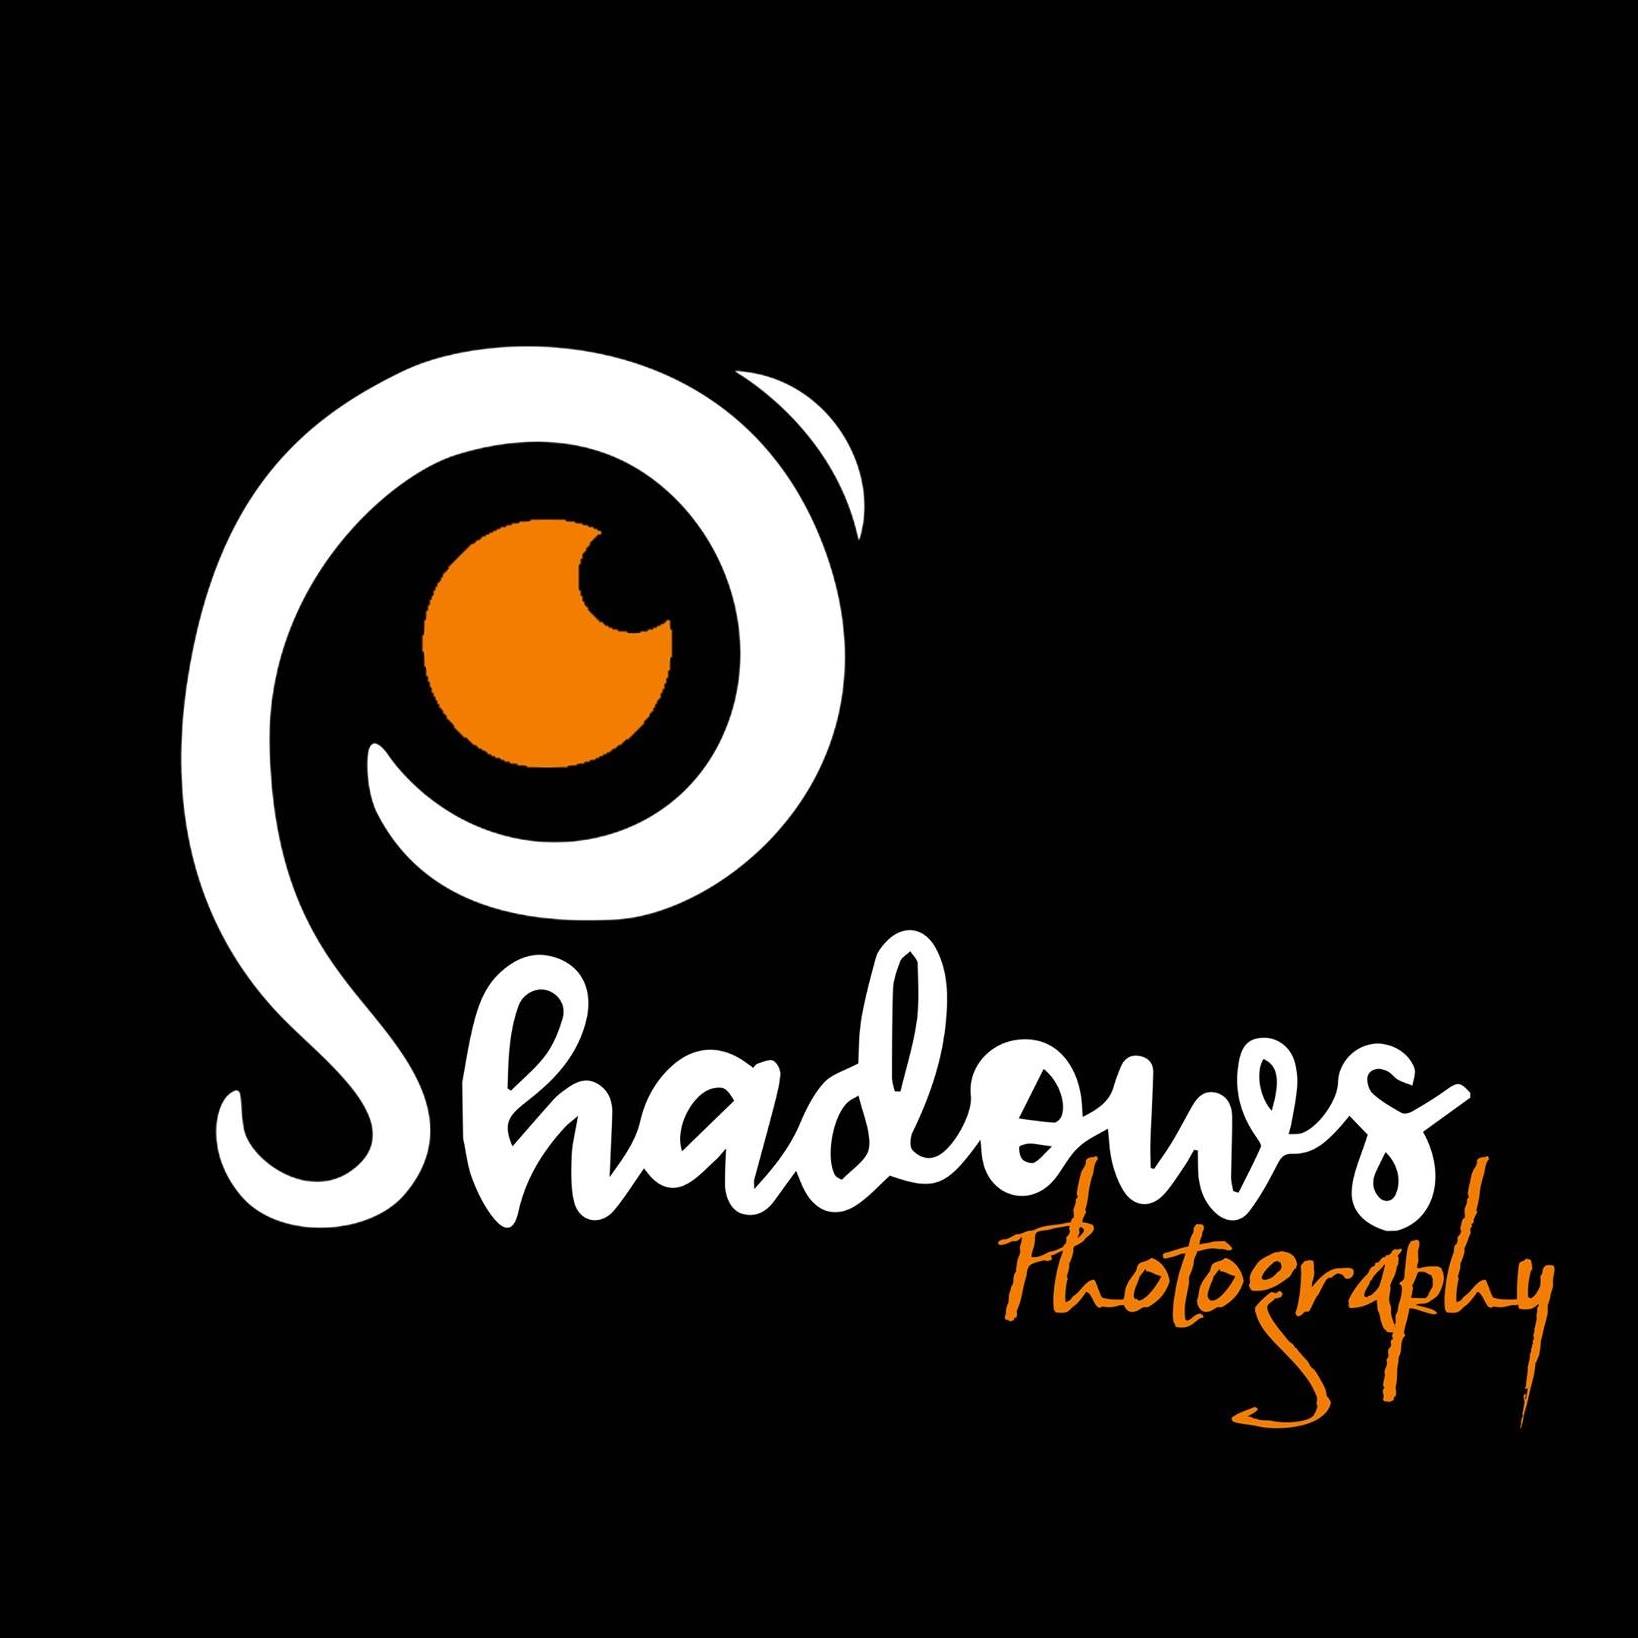 Shadows Photography|Banquet Halls|Event Services